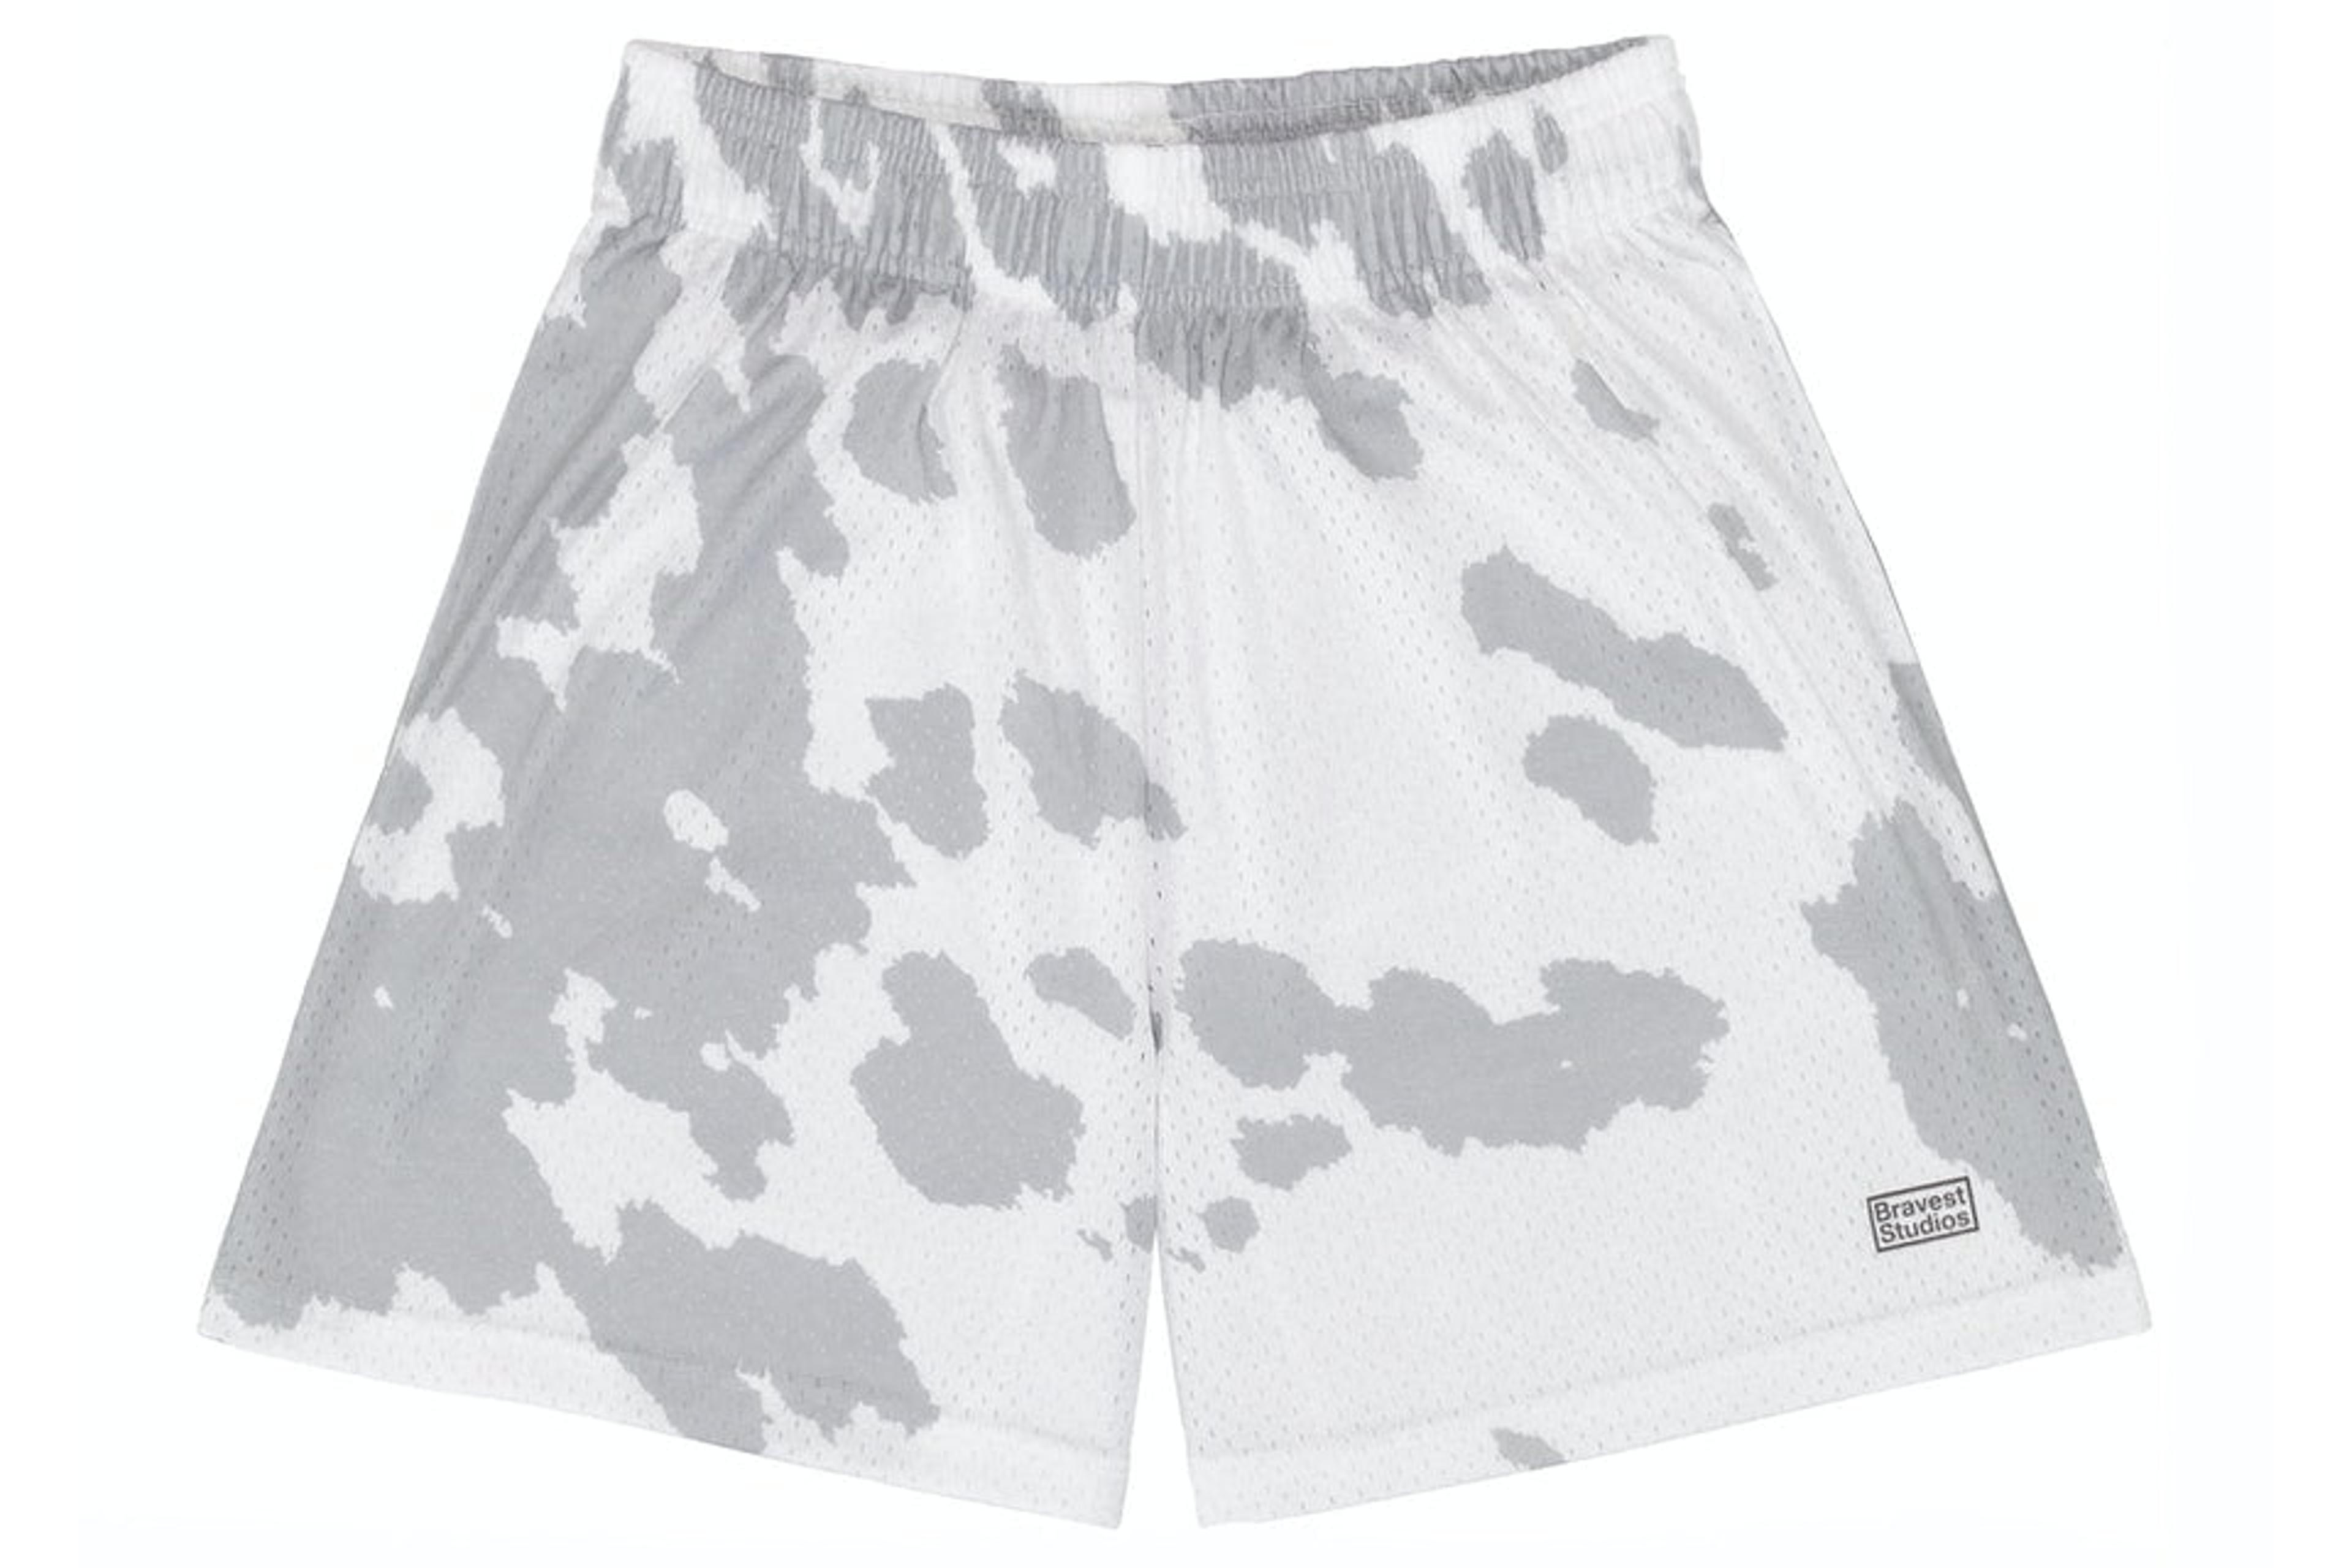 NTWRK - Bravest Studios Cow Print Shorts Grey